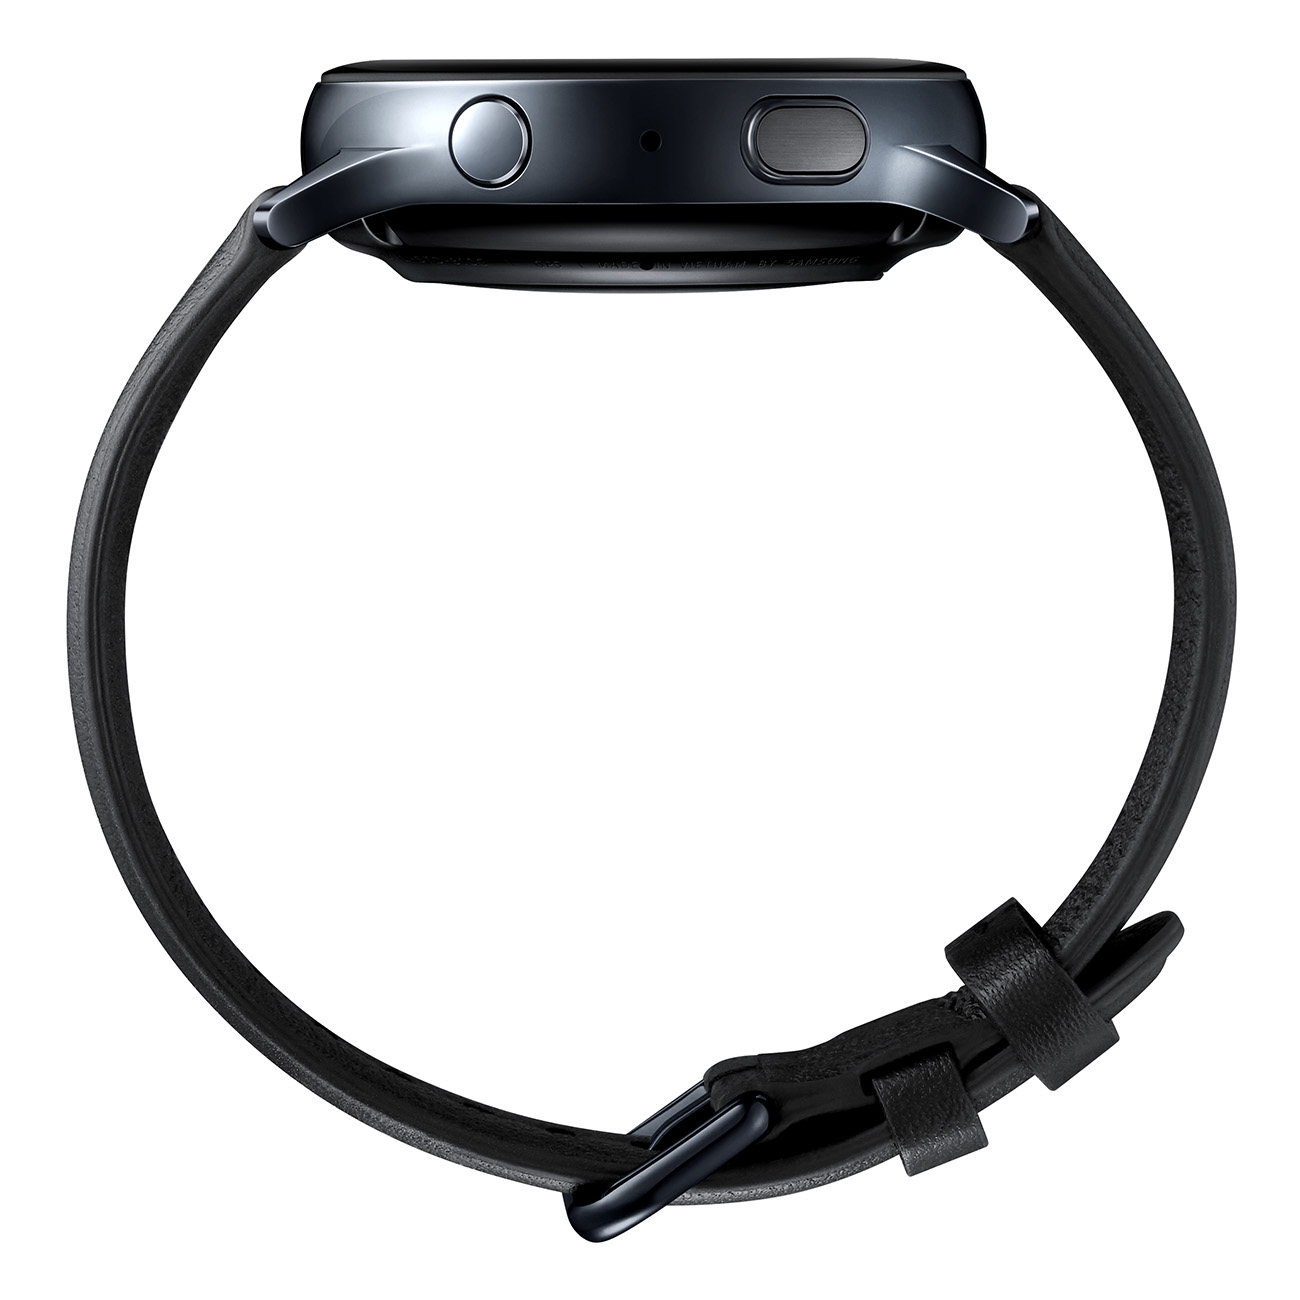 SAMSUNG Galaxy Watch Active schwarz Smartwatch Silikon, 2